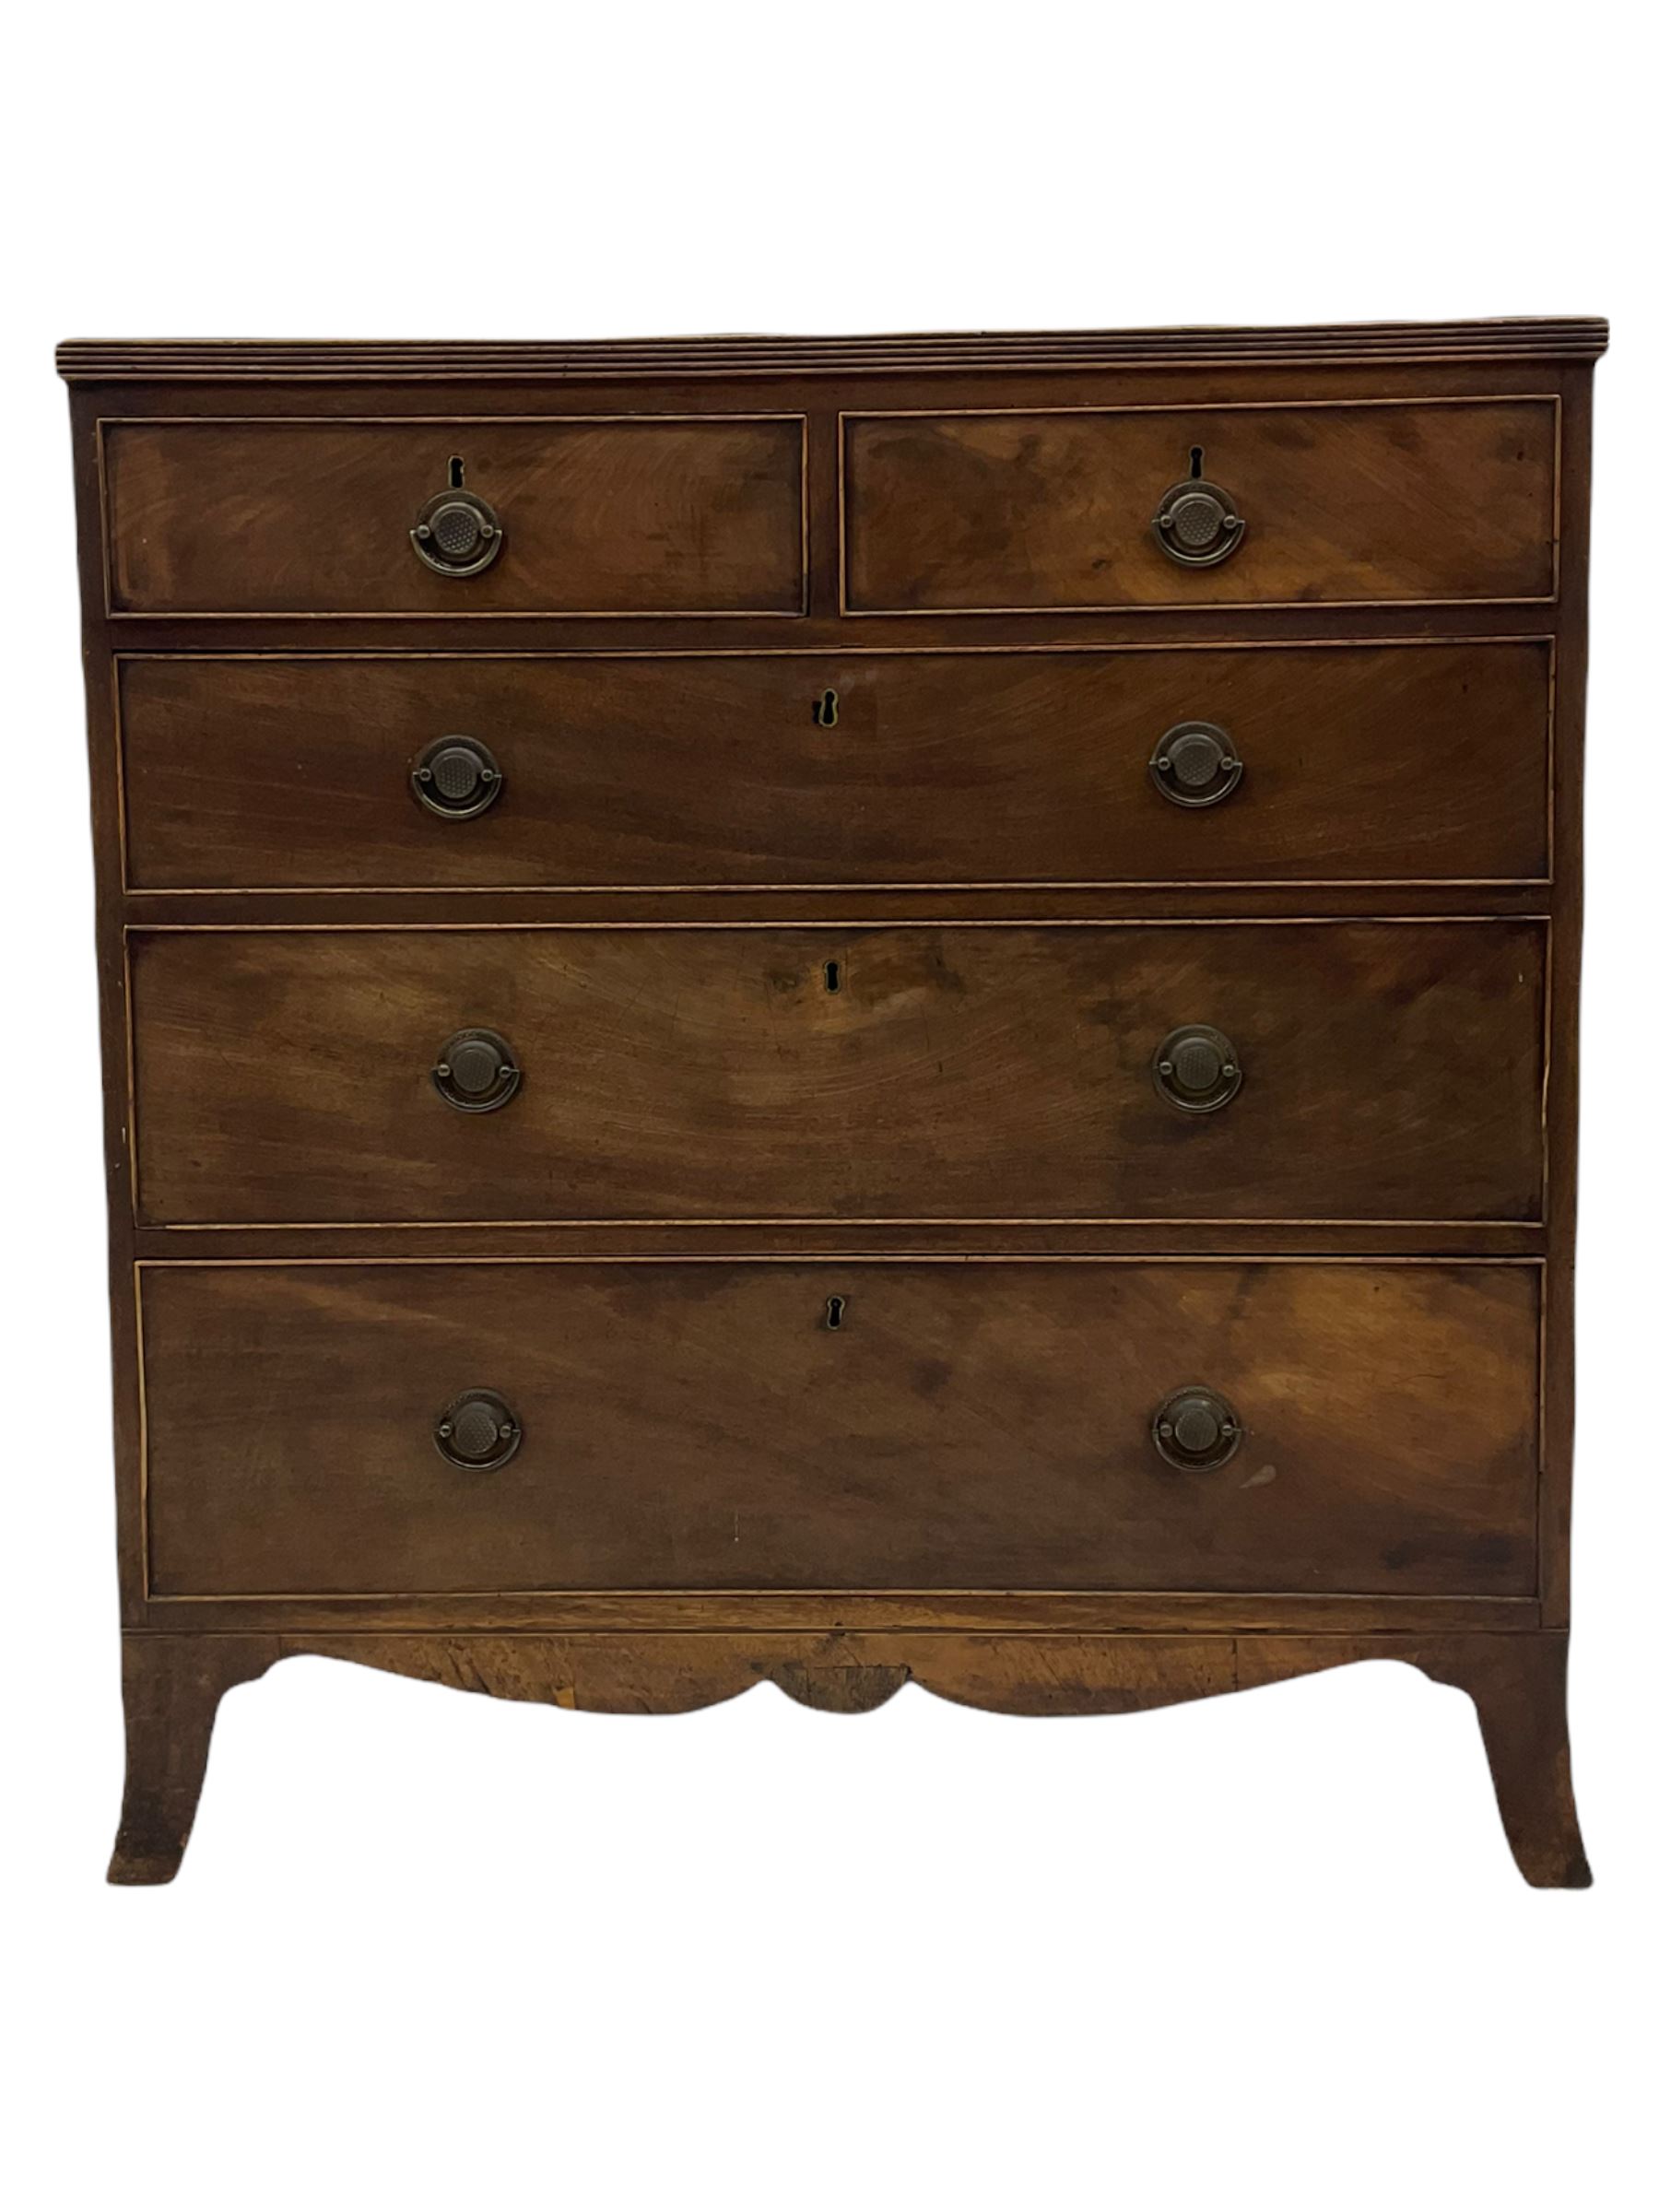 19th century mahogany chest - Image 7 of 7